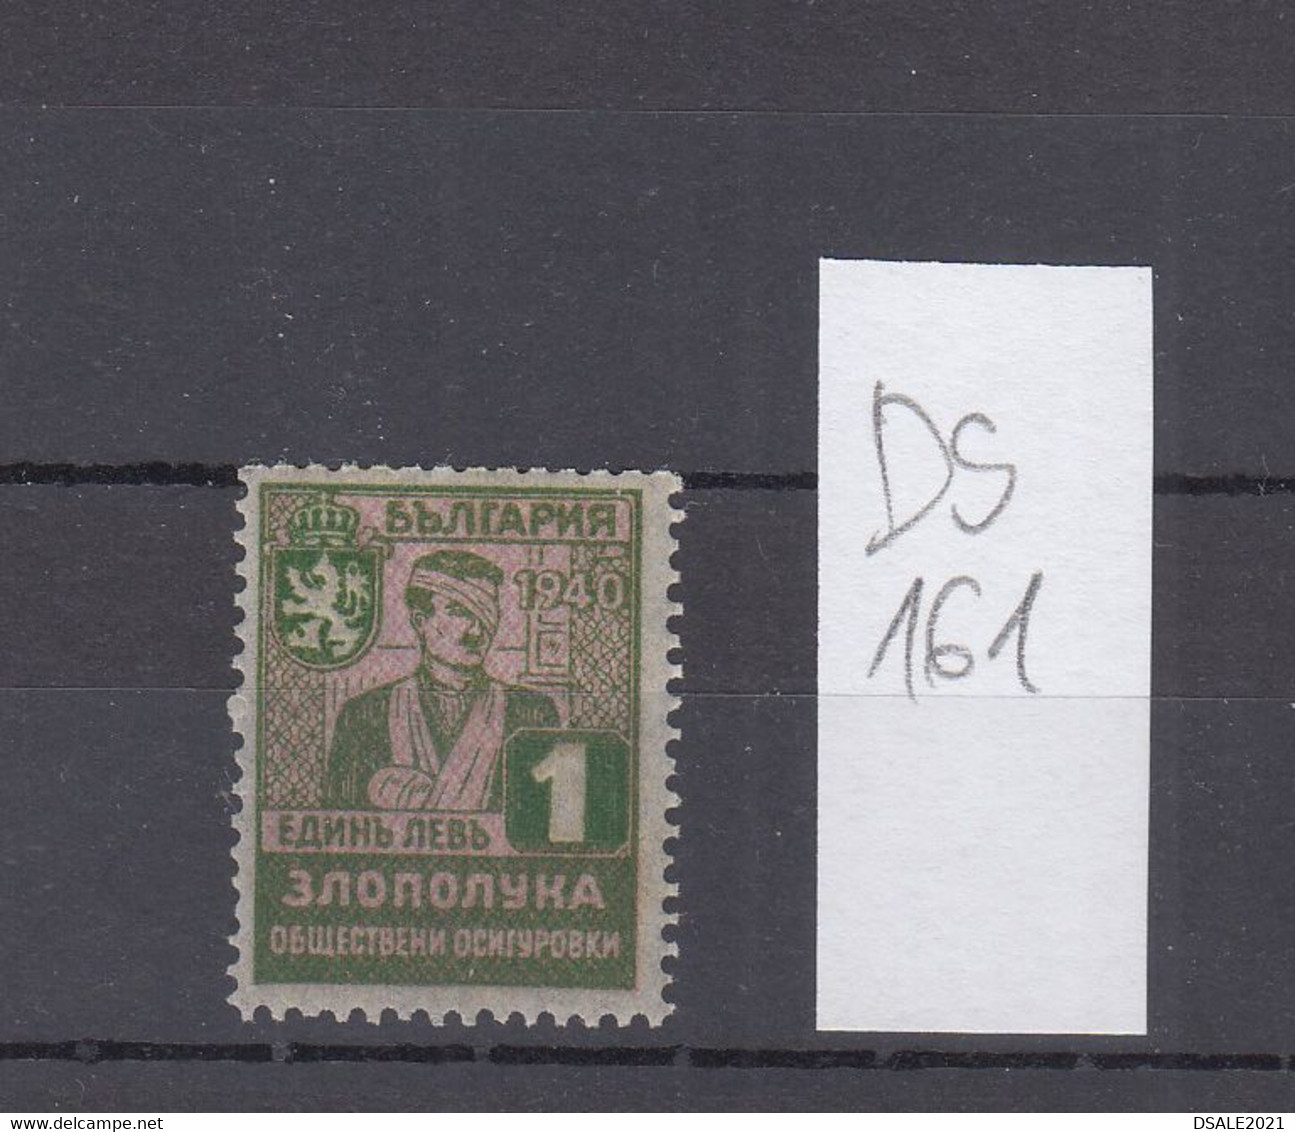 Bulgaria Bulgarie Bulgarije 1940 Social Insurance 1Lv. Accident Insurance Stamp Fiscal Revenue Bulgarian (ds161) - Official Stamps